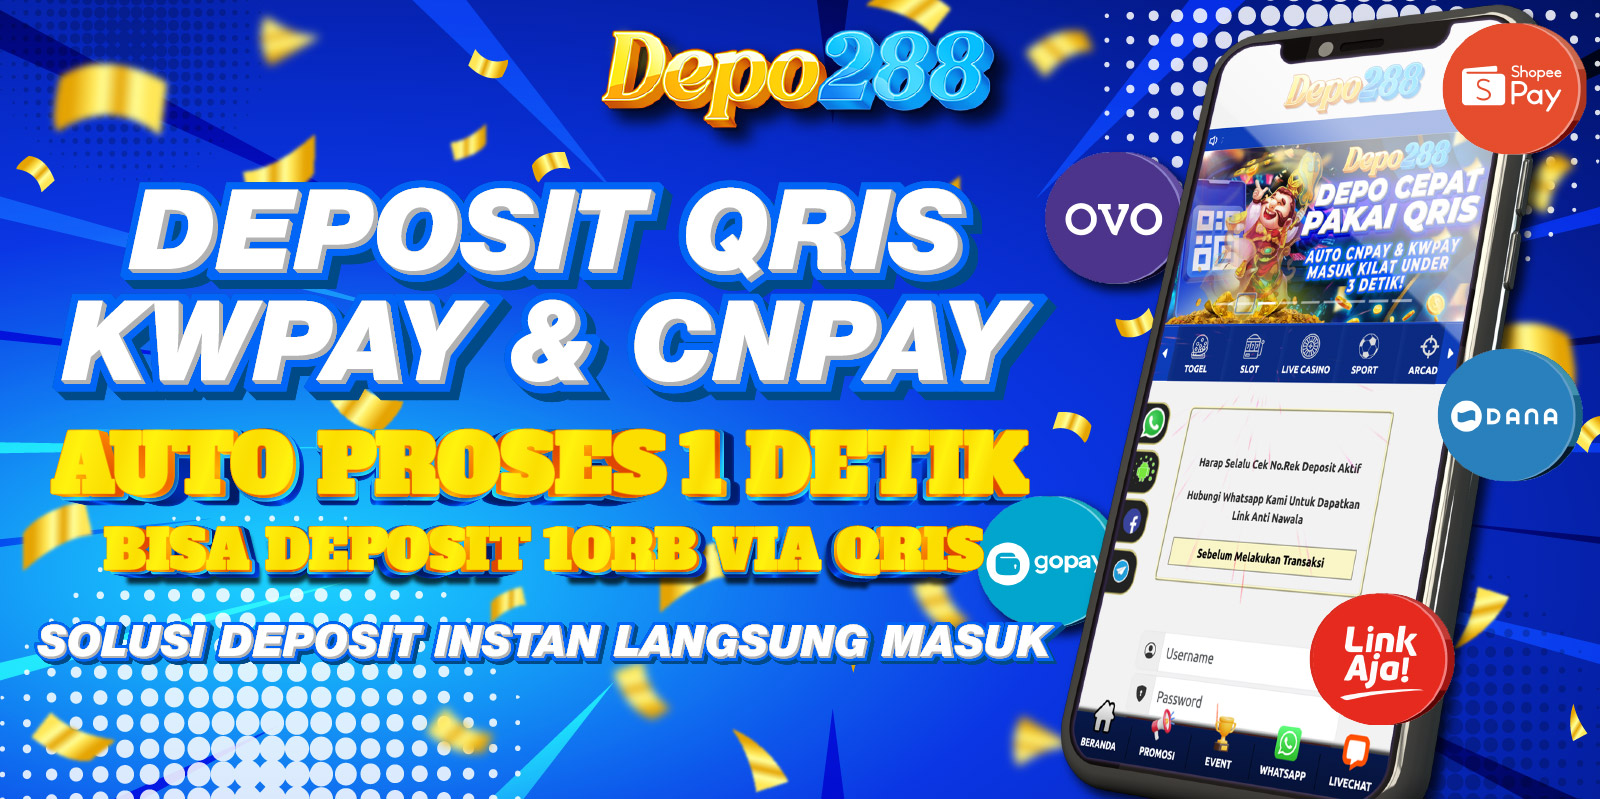 Deposit Qris 10rb - DEPO288